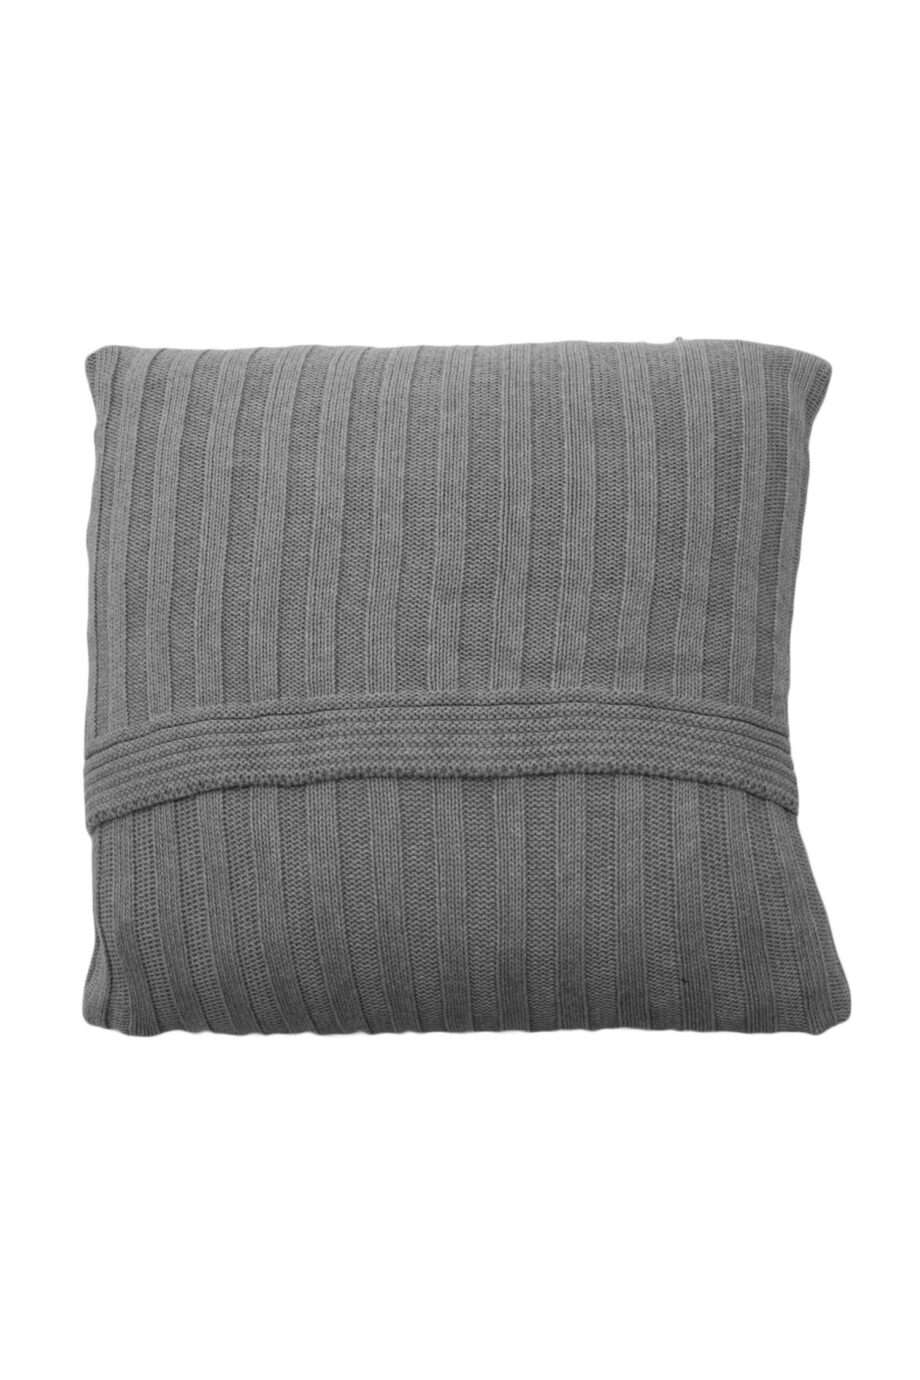 ribs light grey knitted cotton pillowcase medium